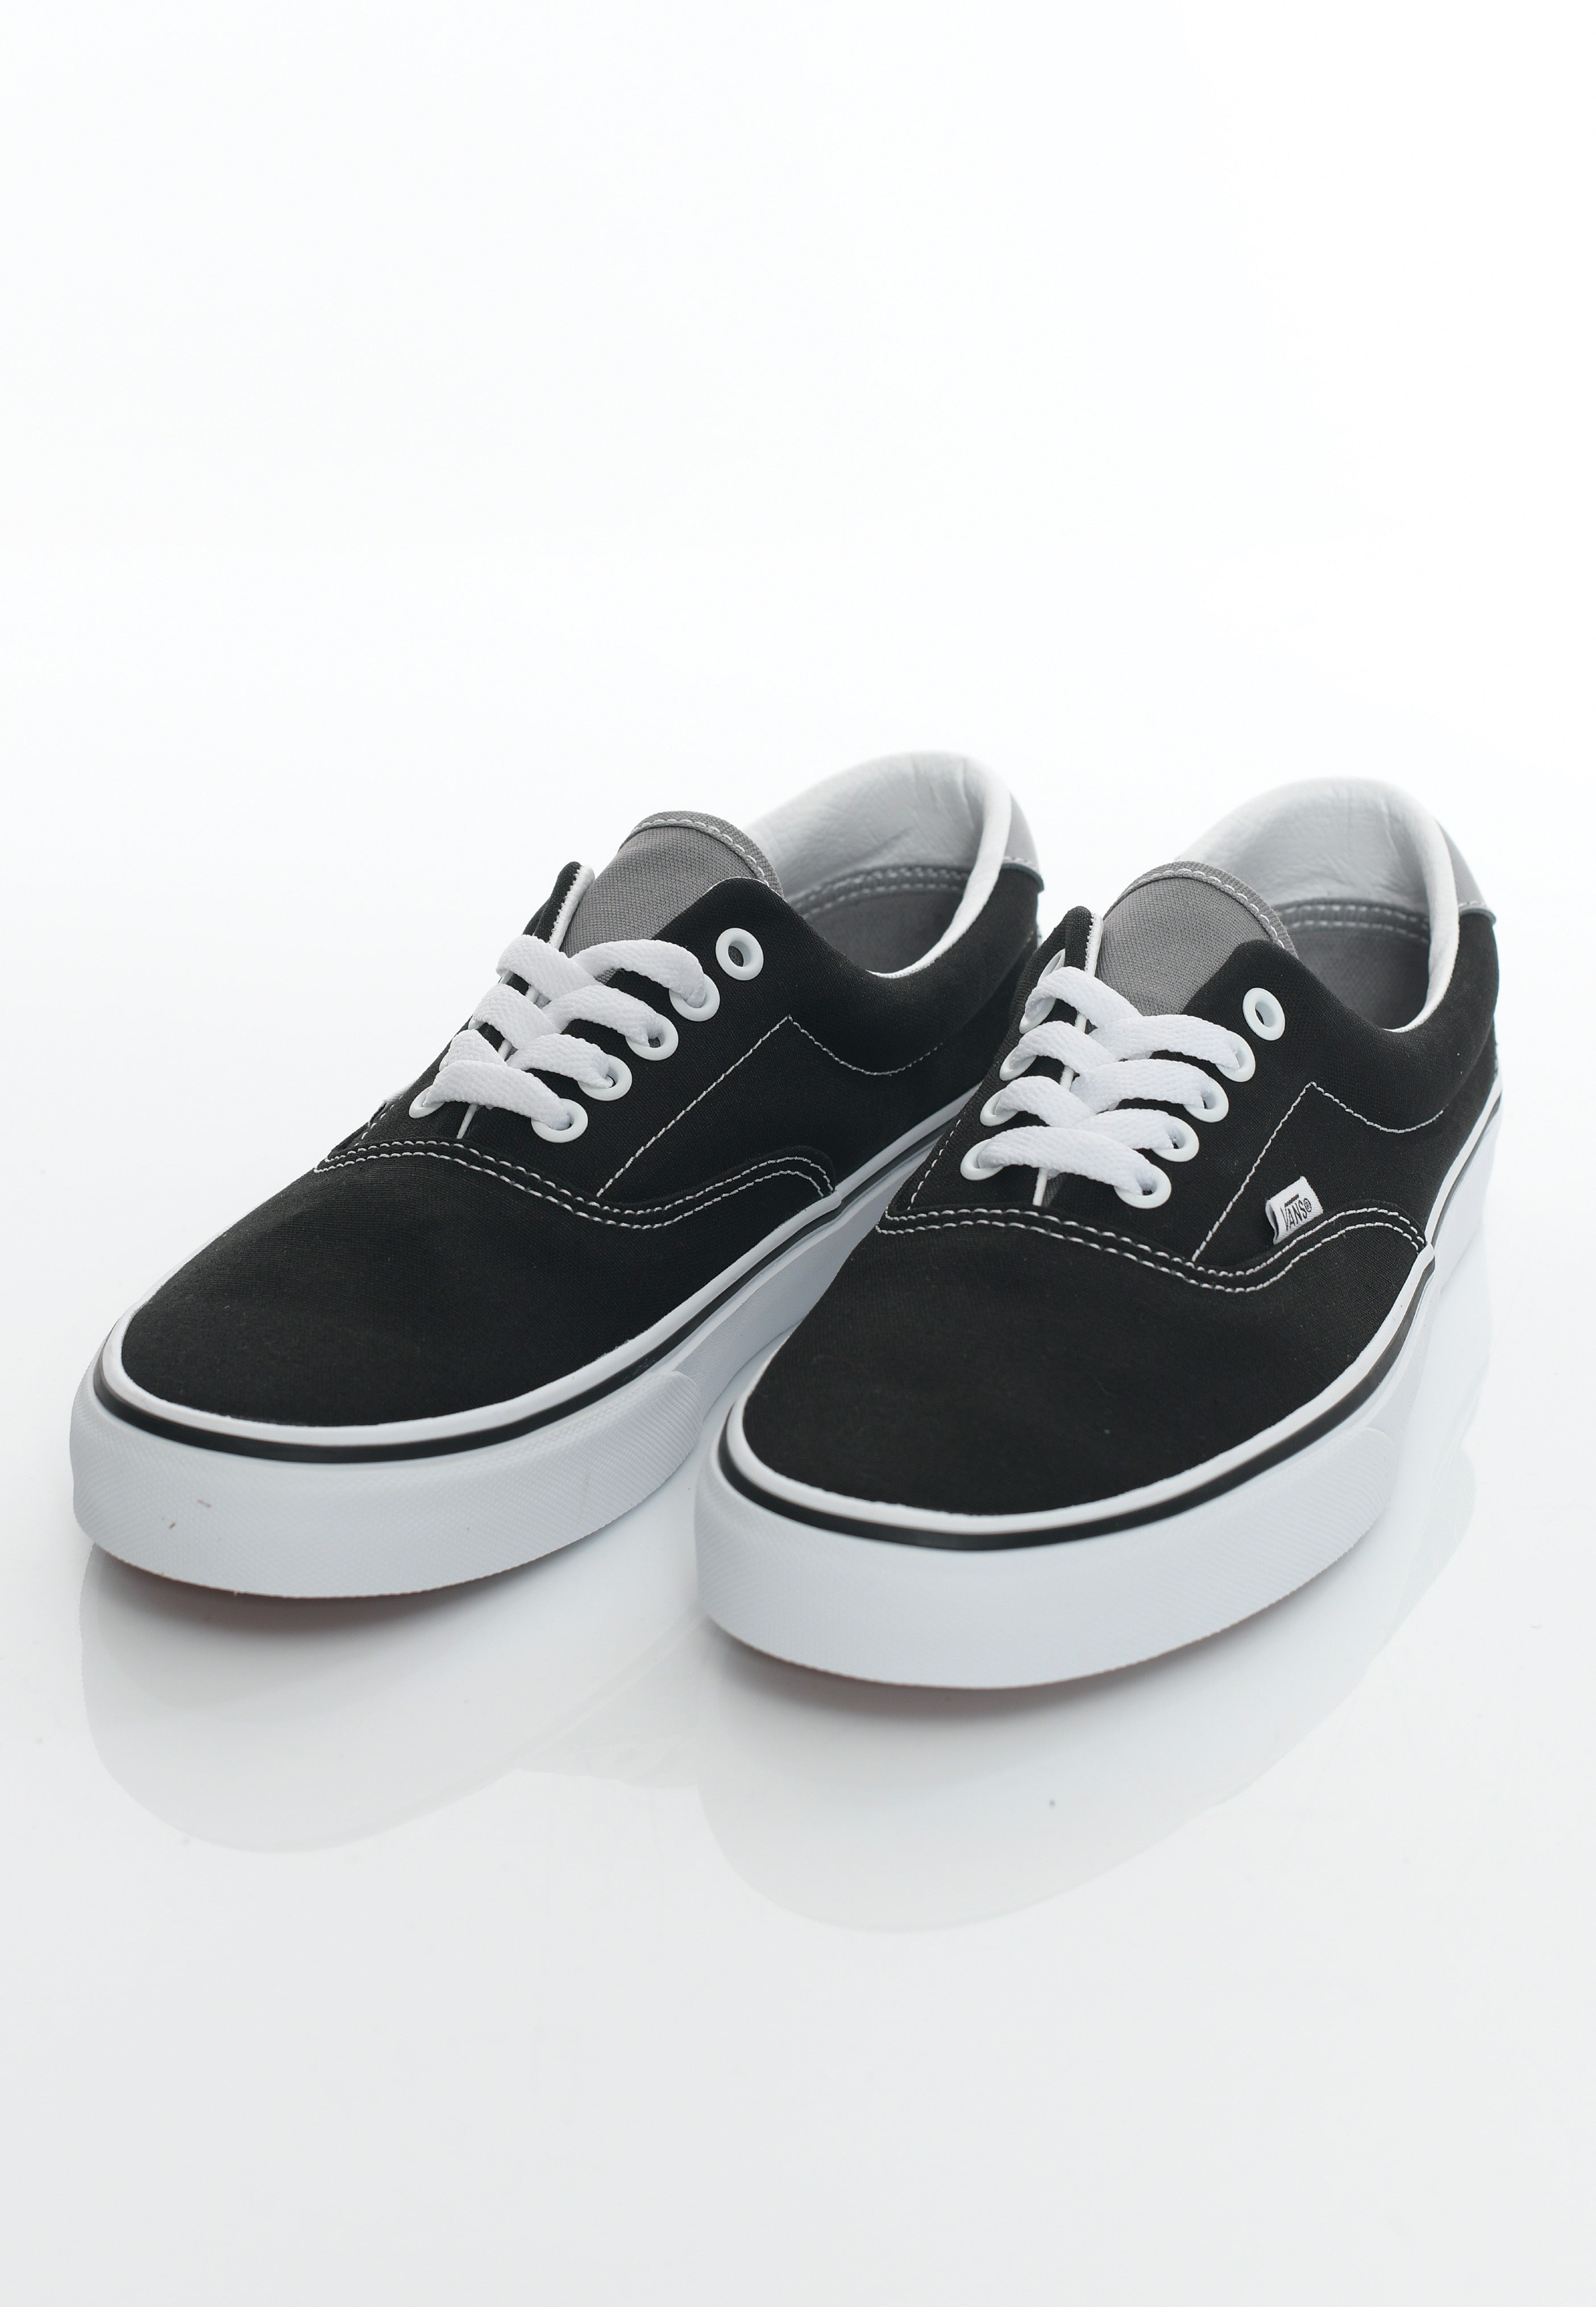 Vans - Era 59 Paisley Black/True White - Shoes